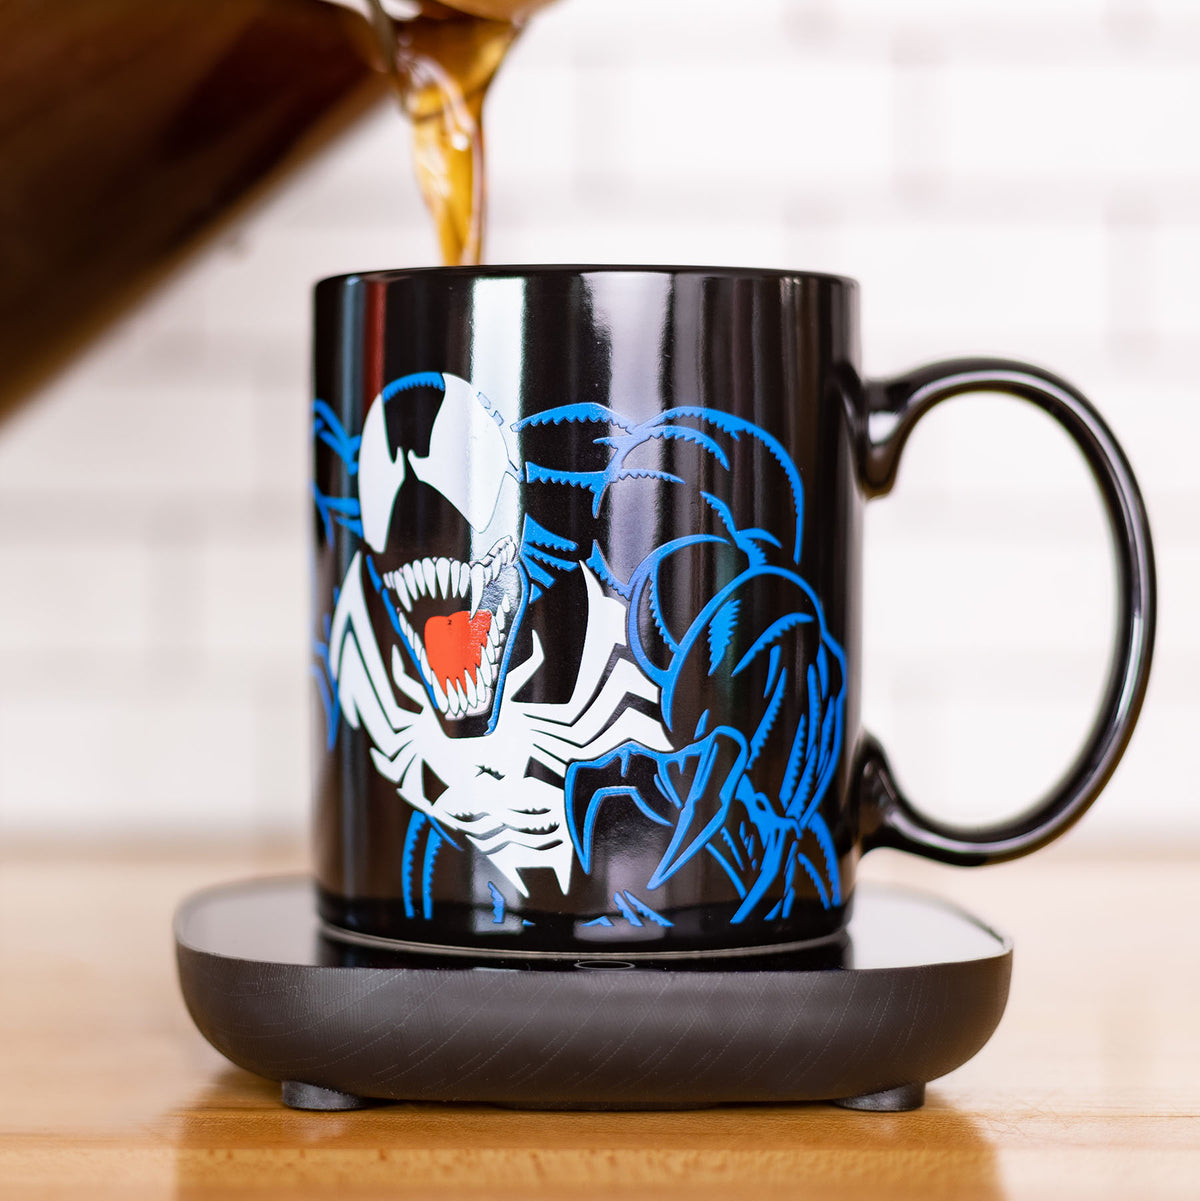 Marvel Deadpool Mug Warmer Set - Uncanny Brands